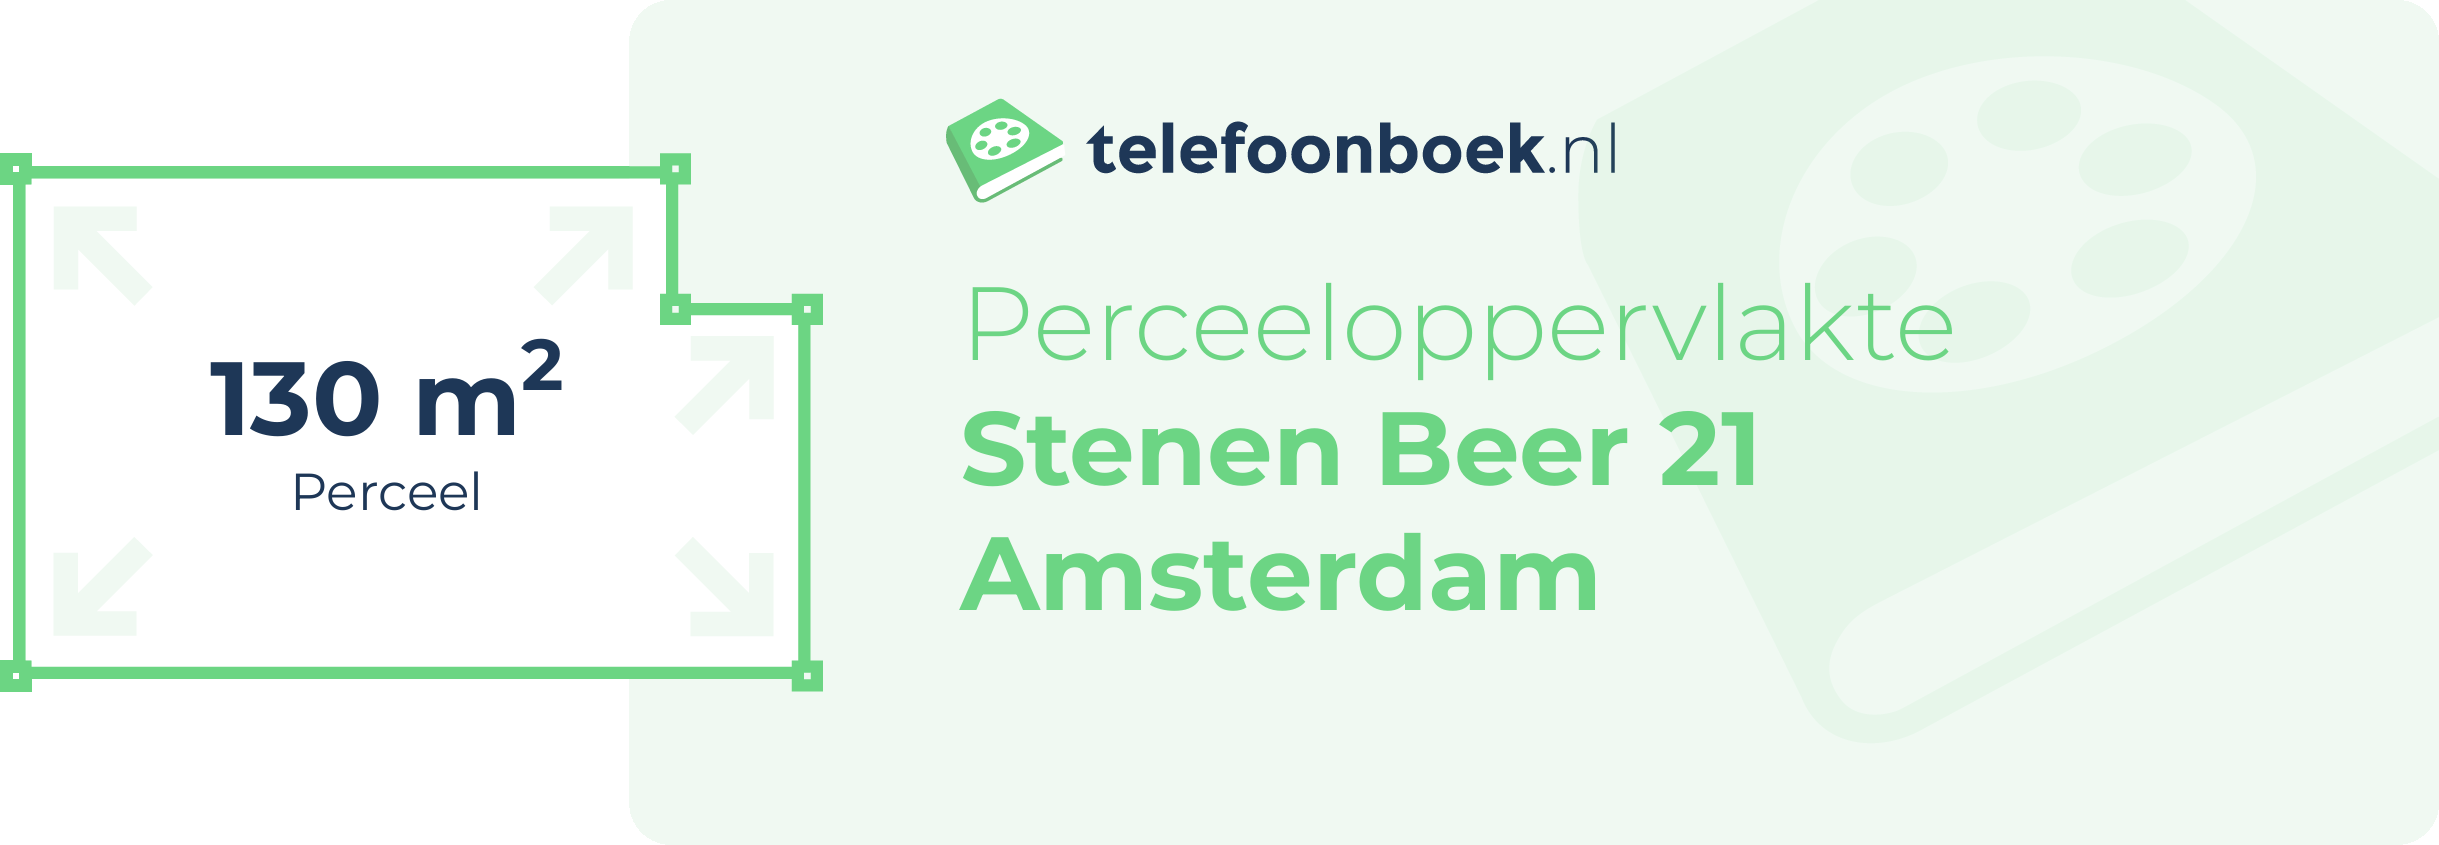 Perceeloppervlakte Stenen Beer 21 Amsterdam